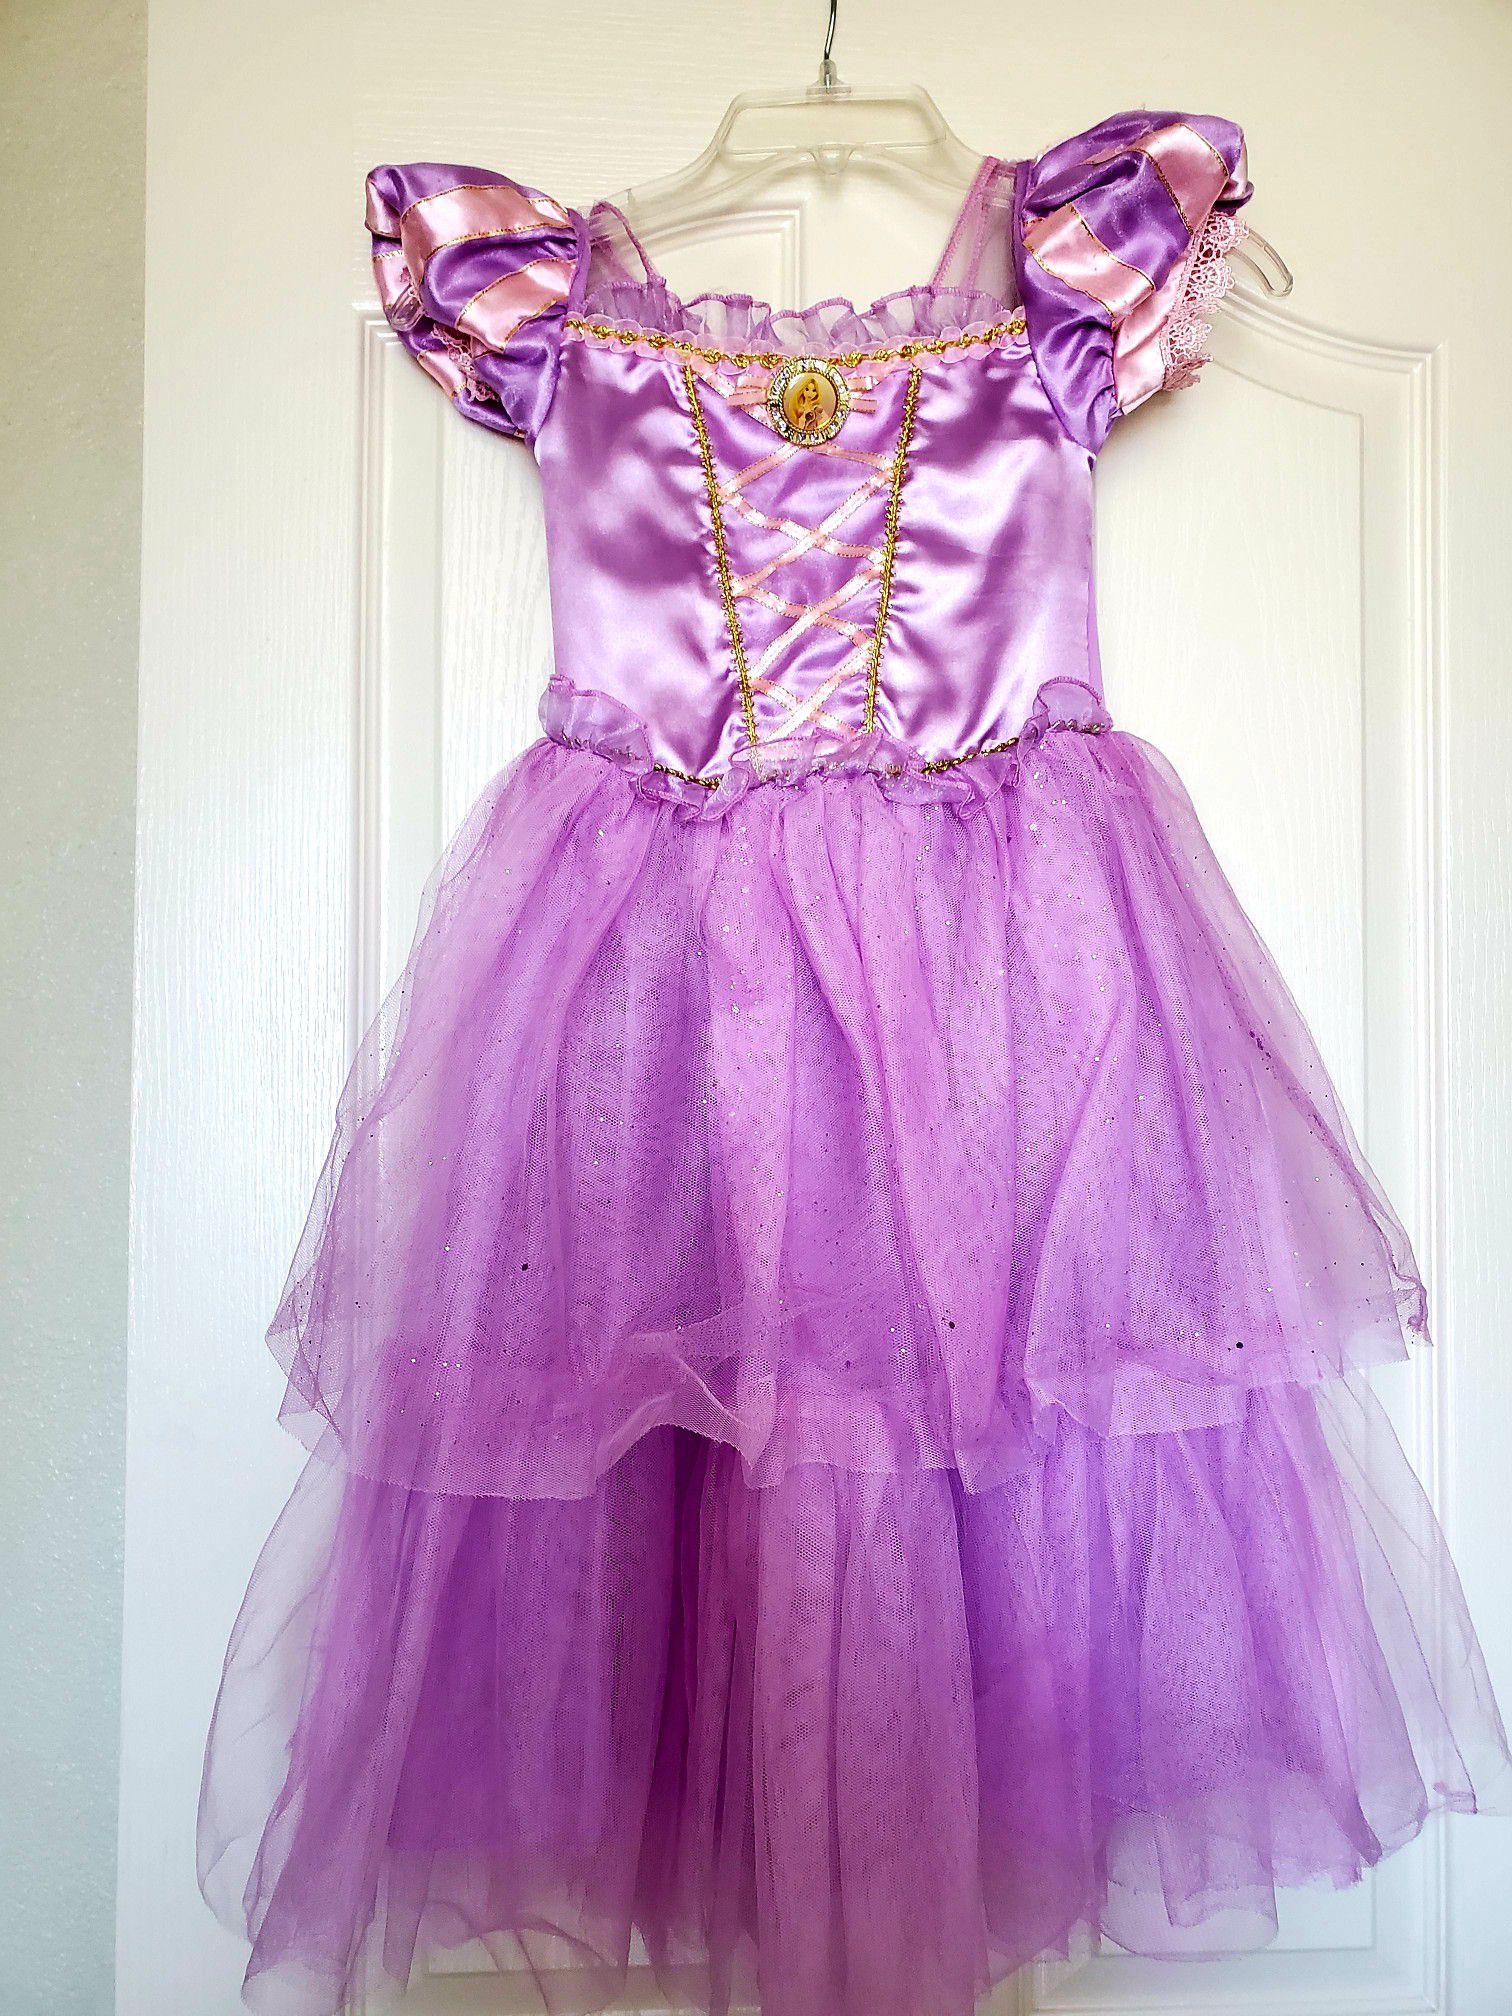 Disney Tangled Rapunzel costume